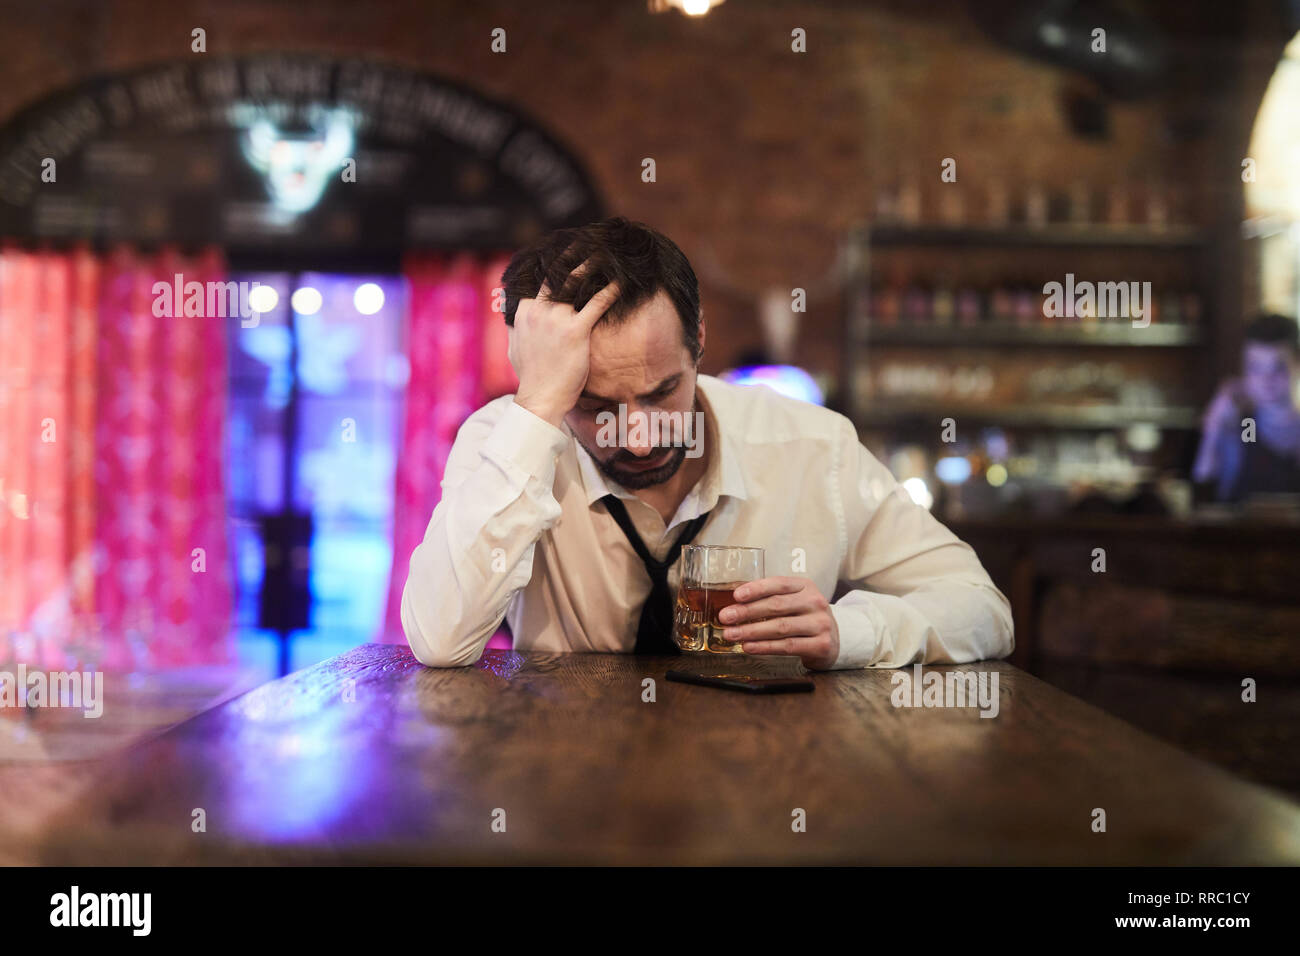 Depressed Man Drinking in Bar Stock Photo